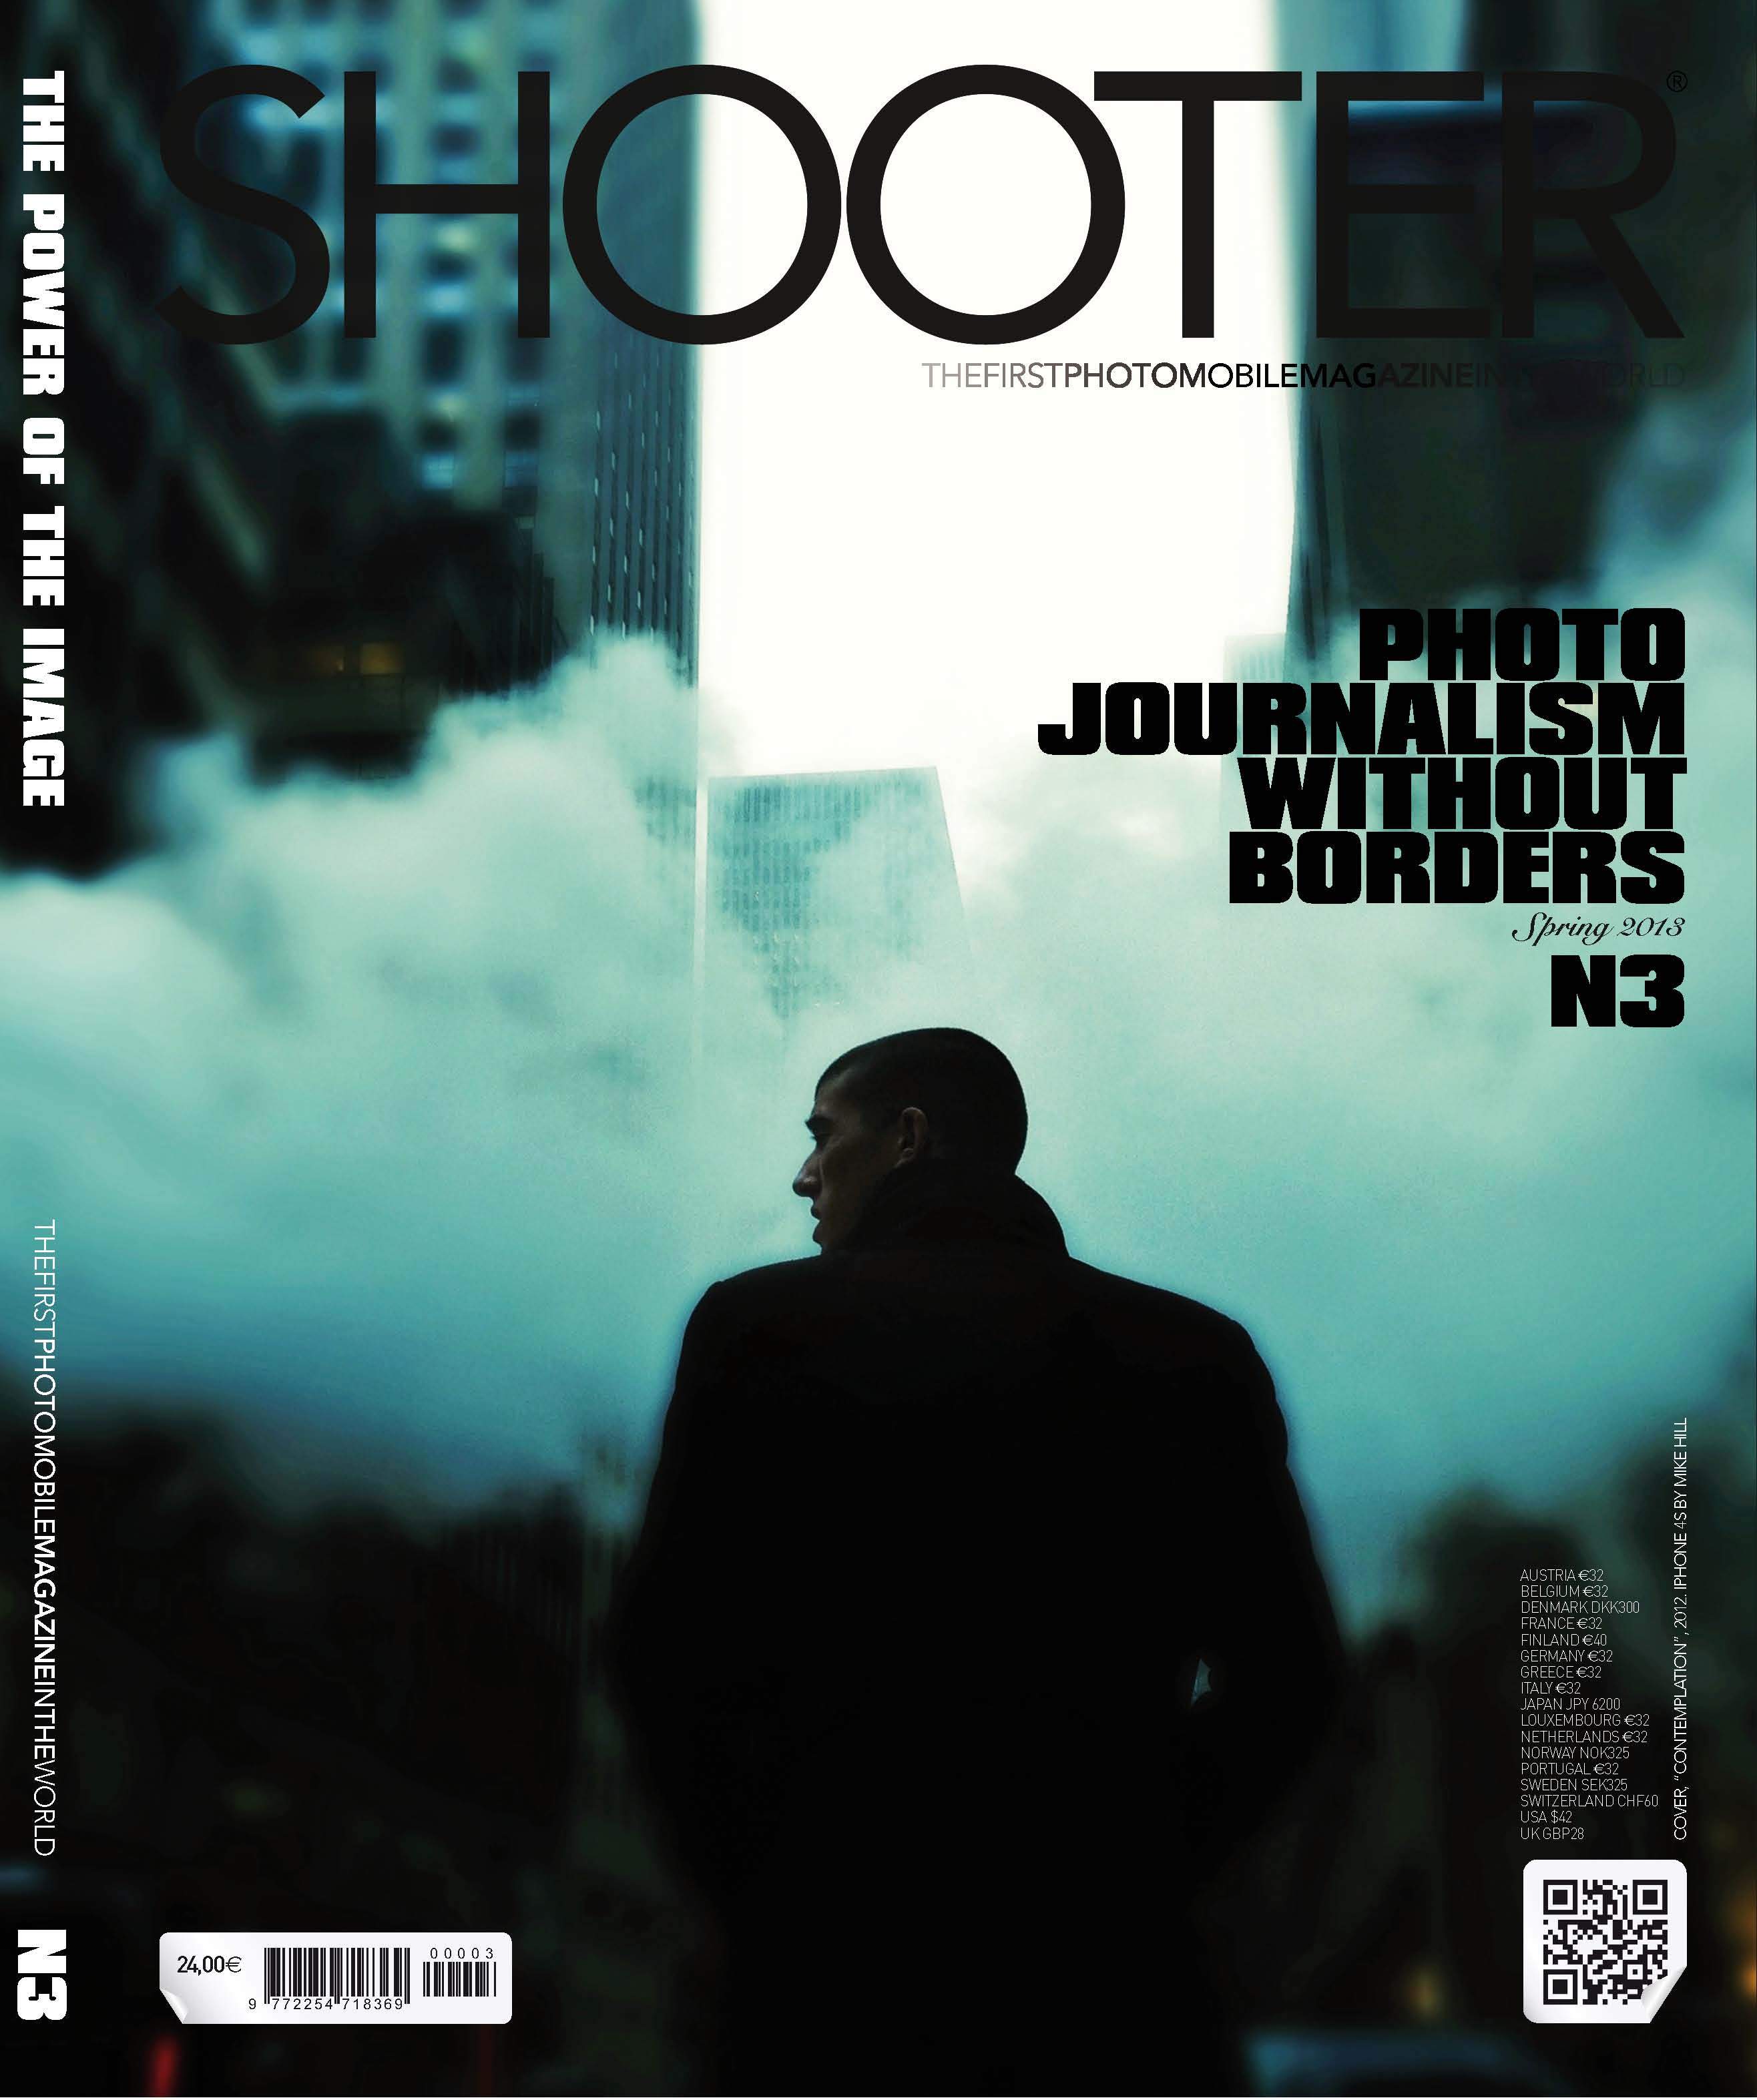 00 COVER ben lowy SHOOTER N3_Maquetación 1